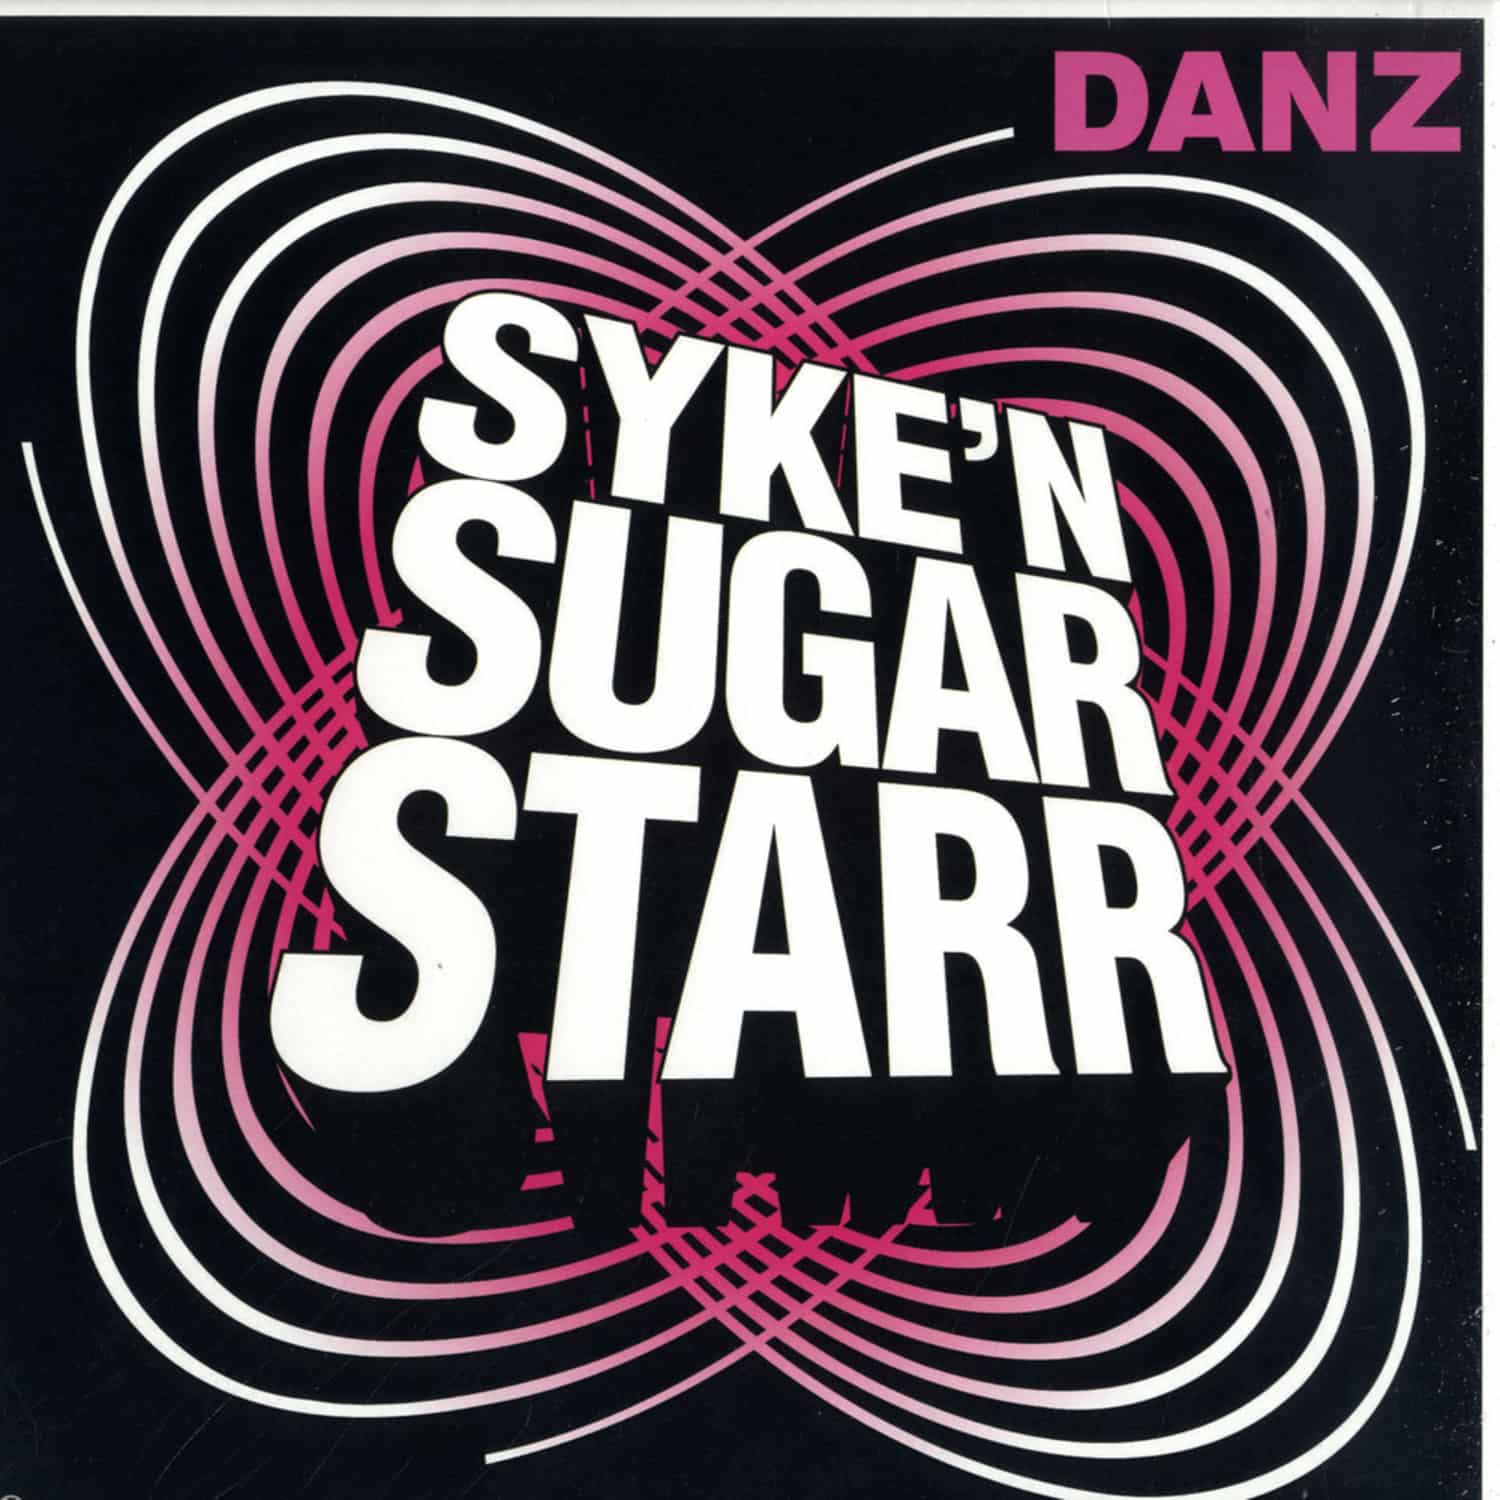 Syke N Sugarstarr - DANZ